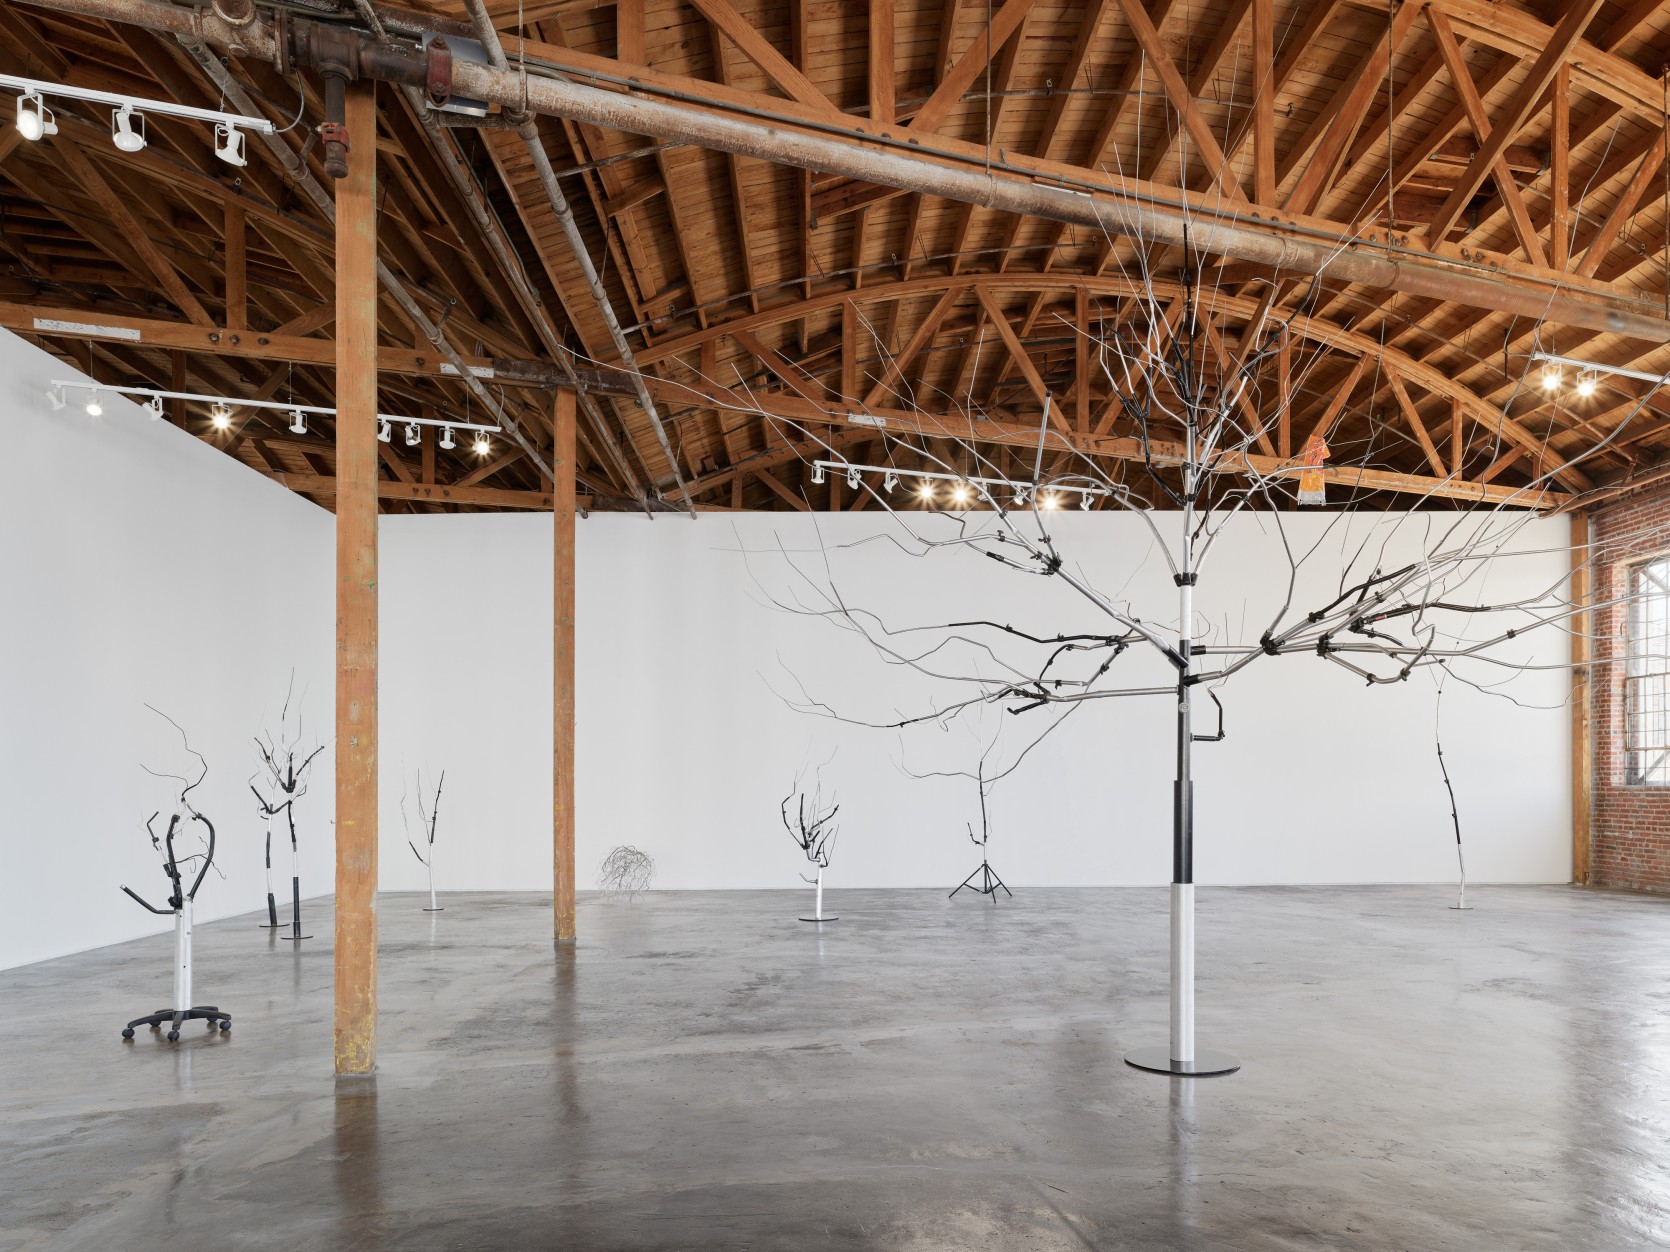 Josh Callaghan, "Family Tree," installation view, 2022